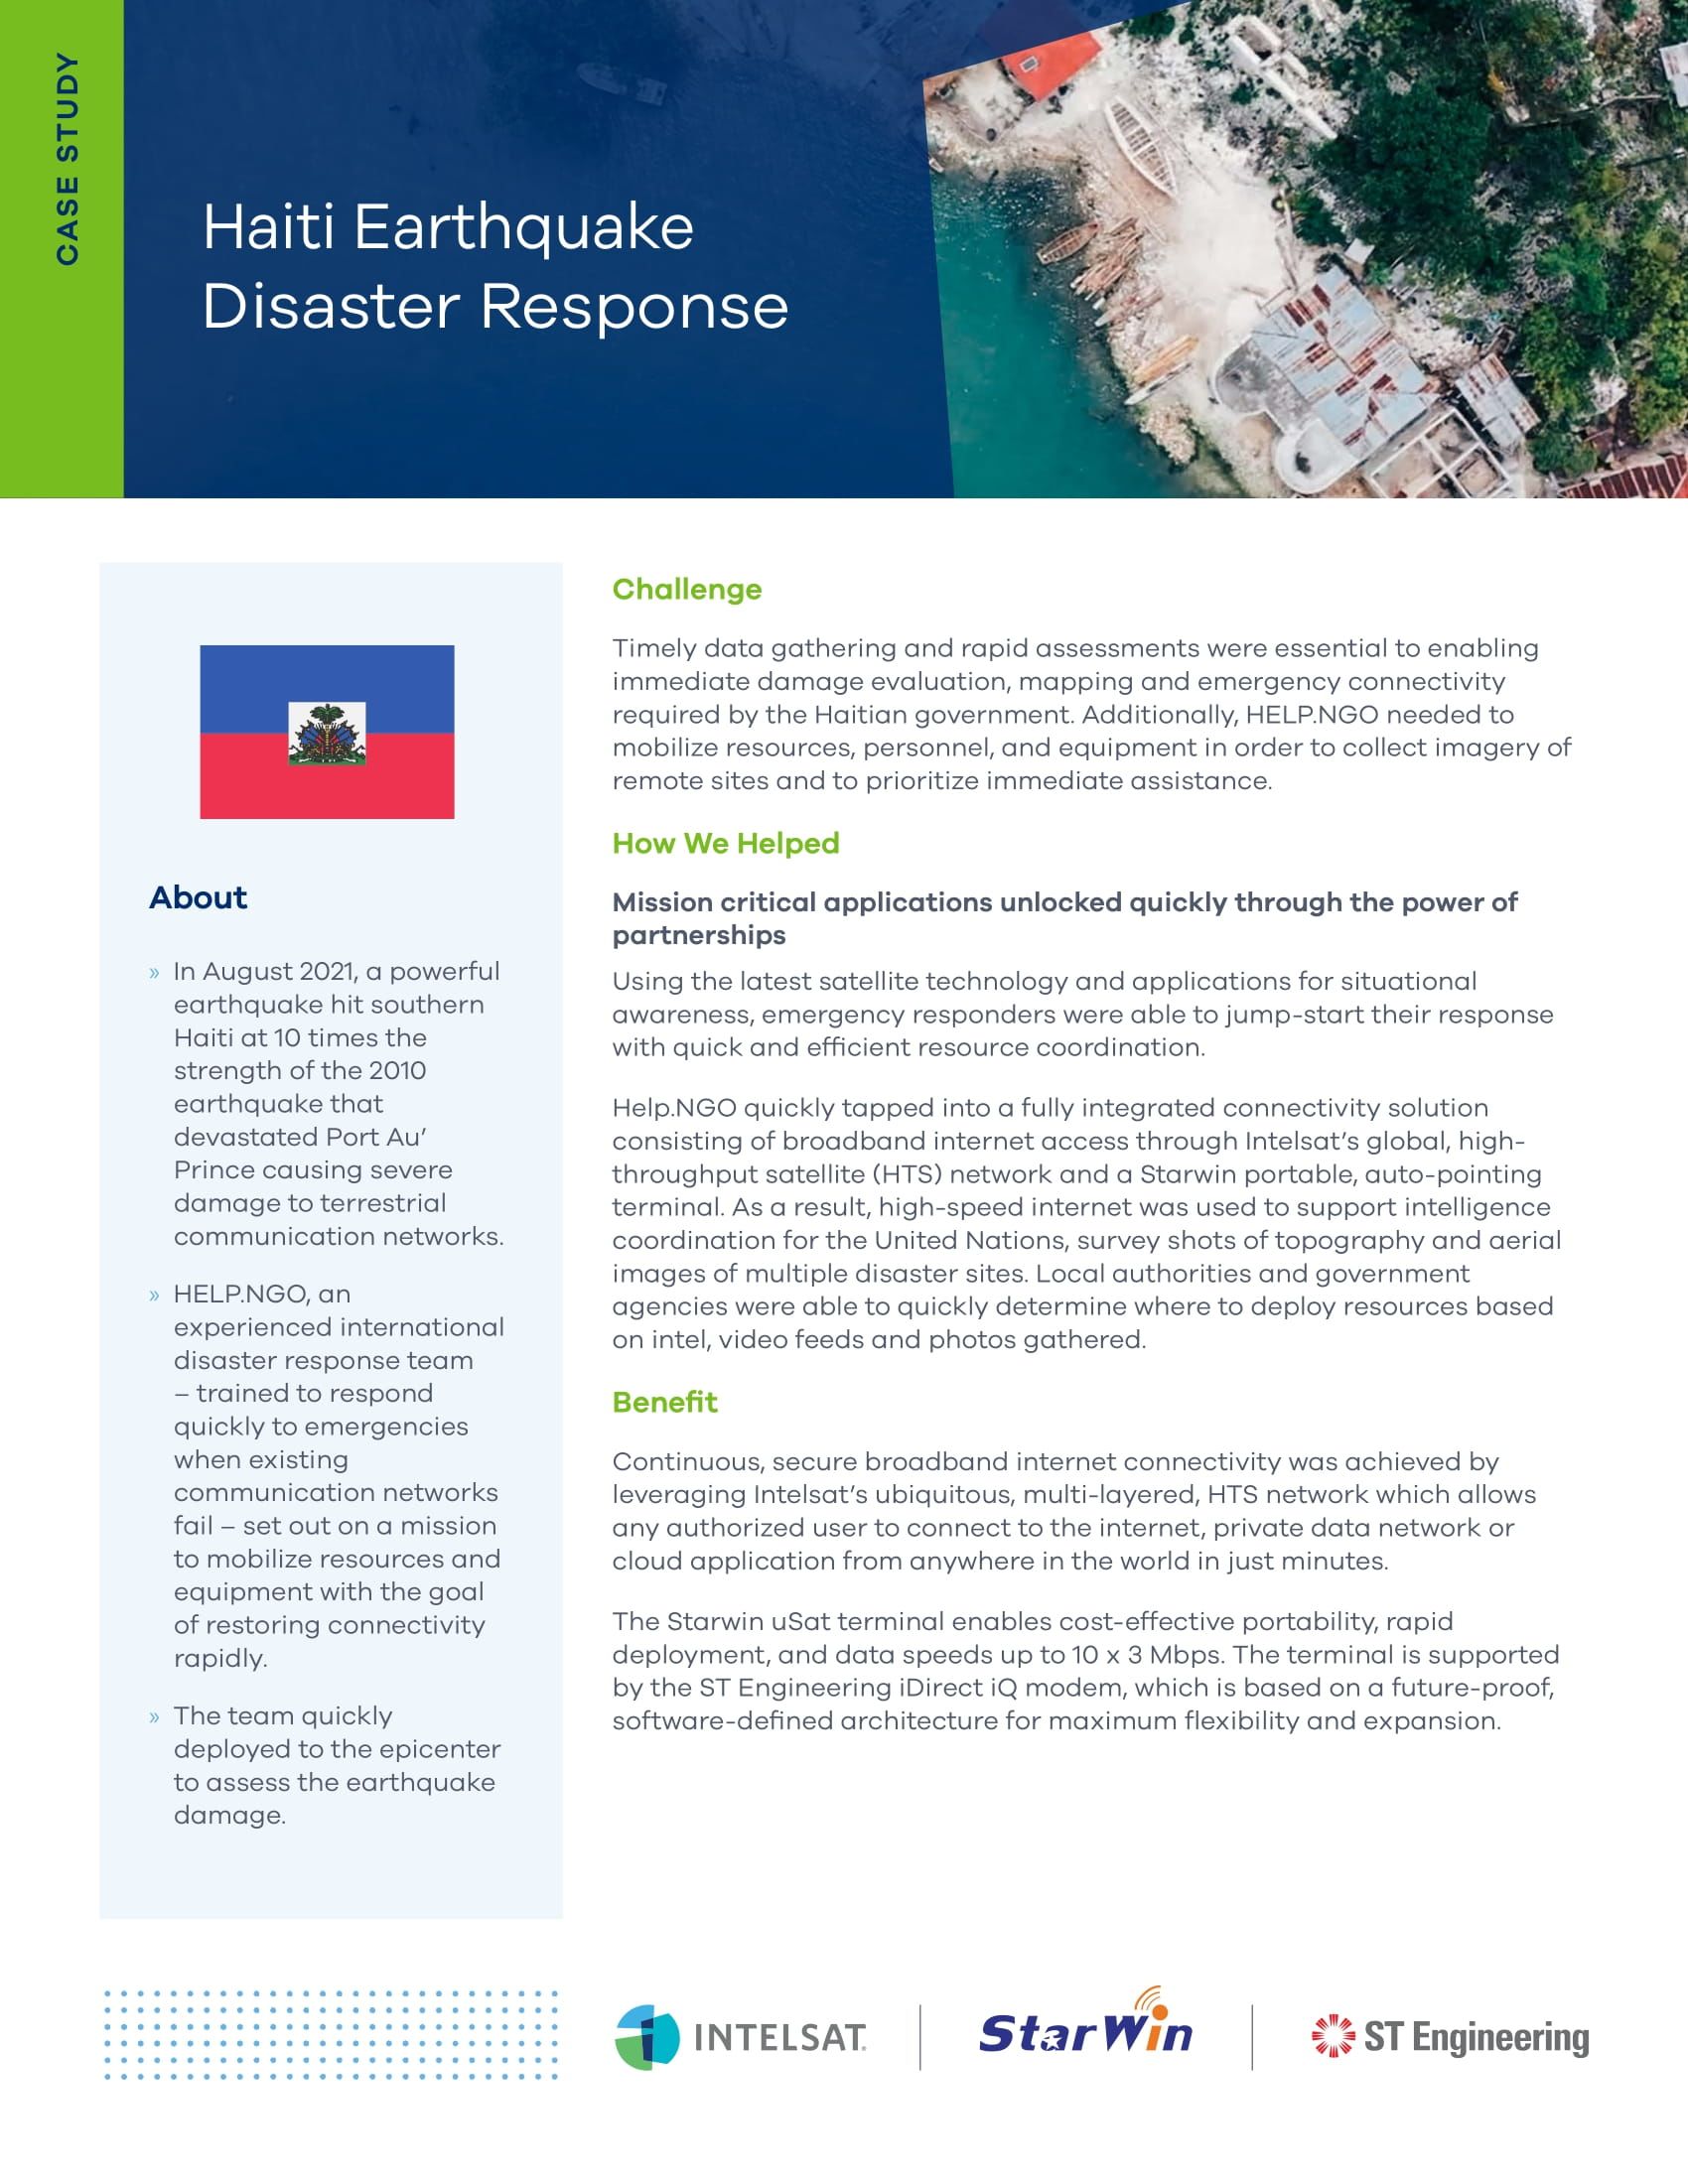 earthquake response case study